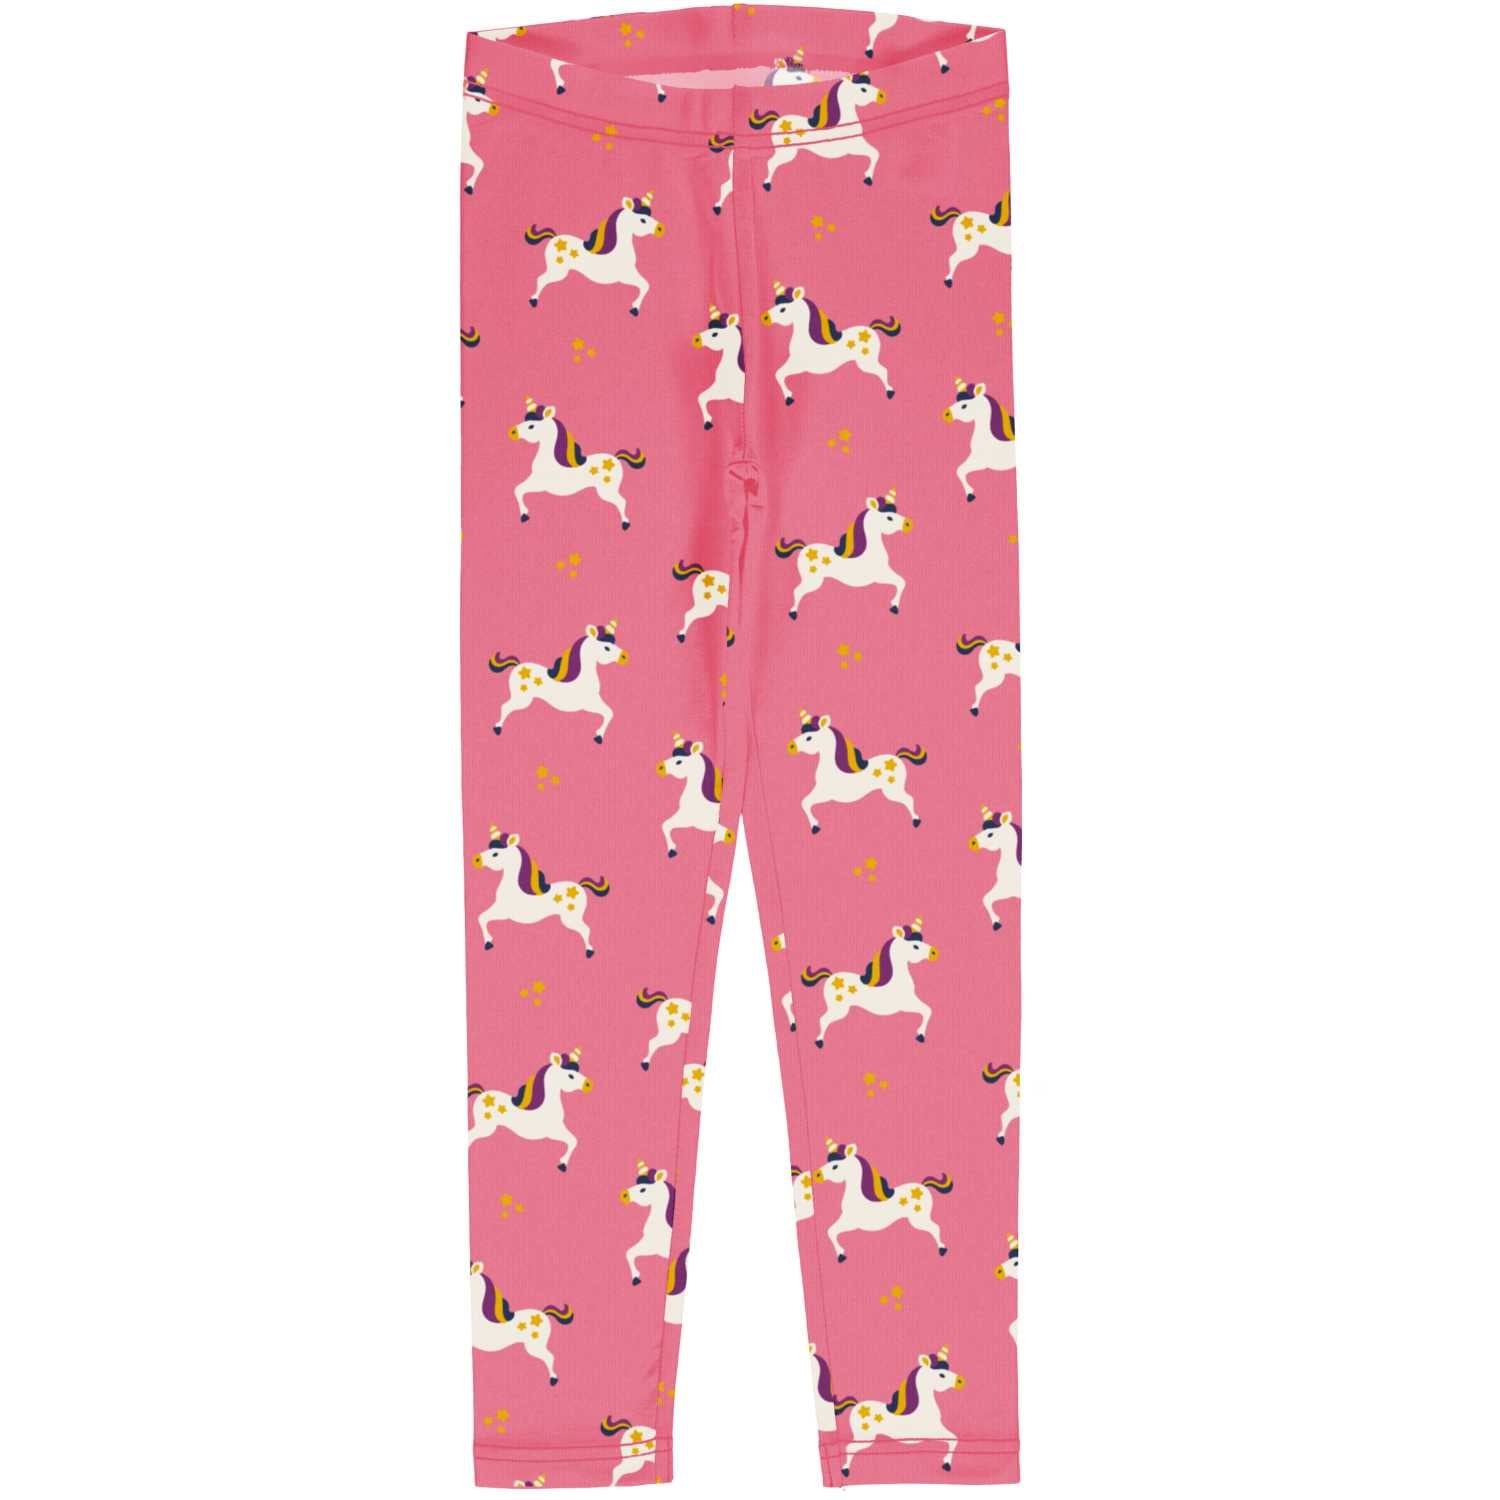 Maxomorra Pink Unicorn Leggings Dxs2413-Sxs2406 Clothing 3-4YRS / Pink,5-6YRS / Pink,7-8YRS / Pink,9-10YRS / Pink,1-2 YRS / Pink